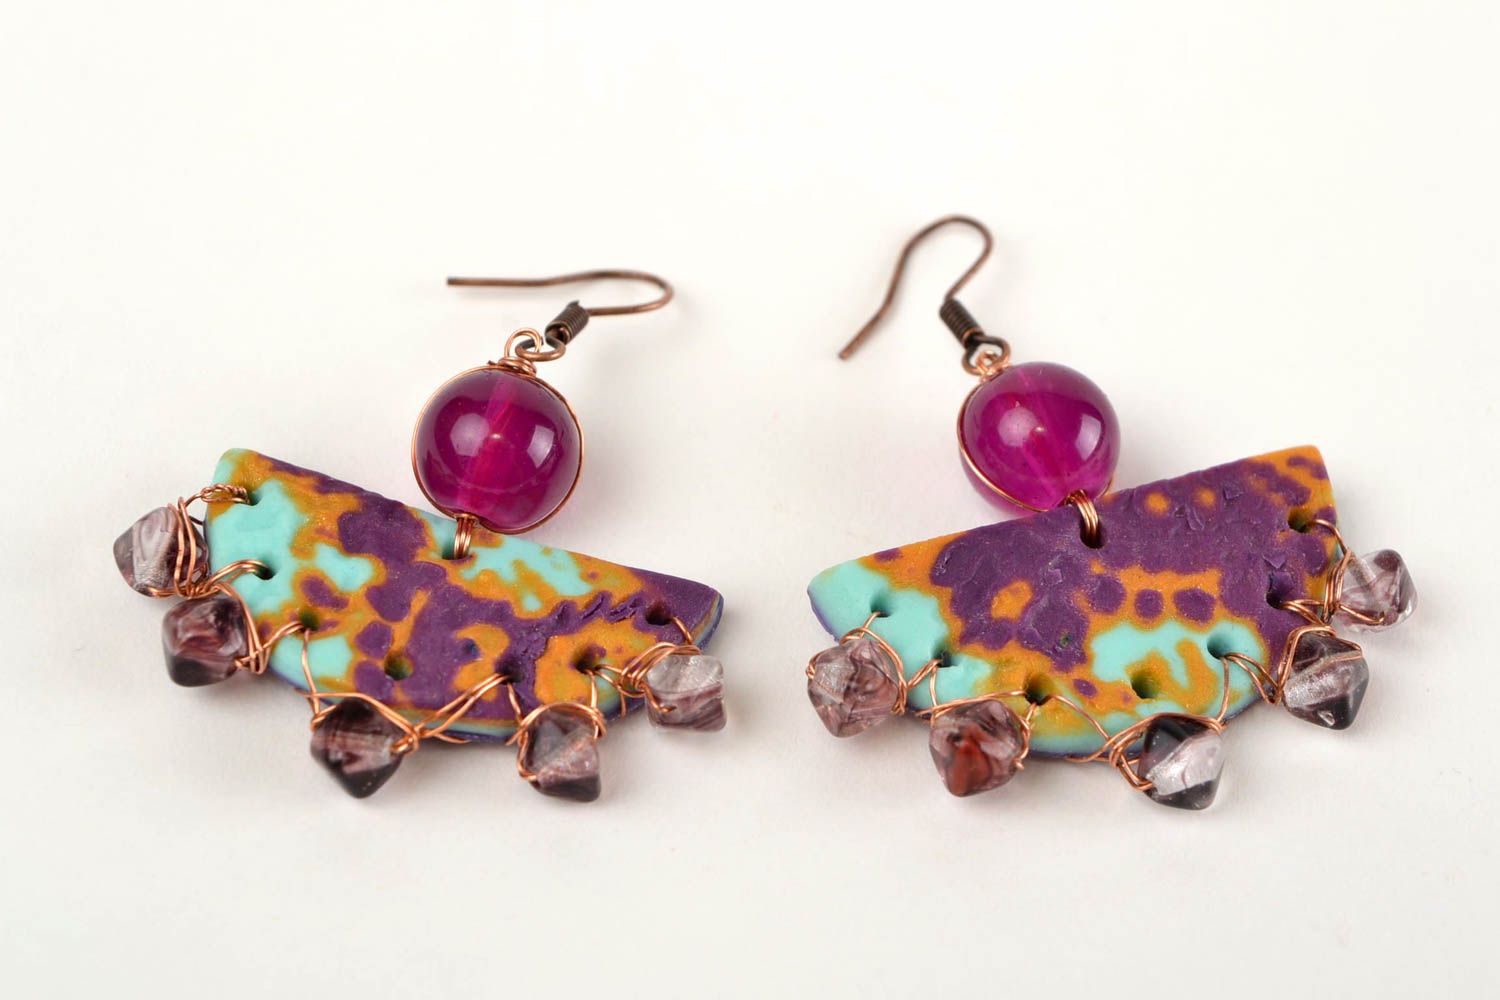 Handmade earrings clay jewelry unusual accessory fashion earrings gift for her photo 5